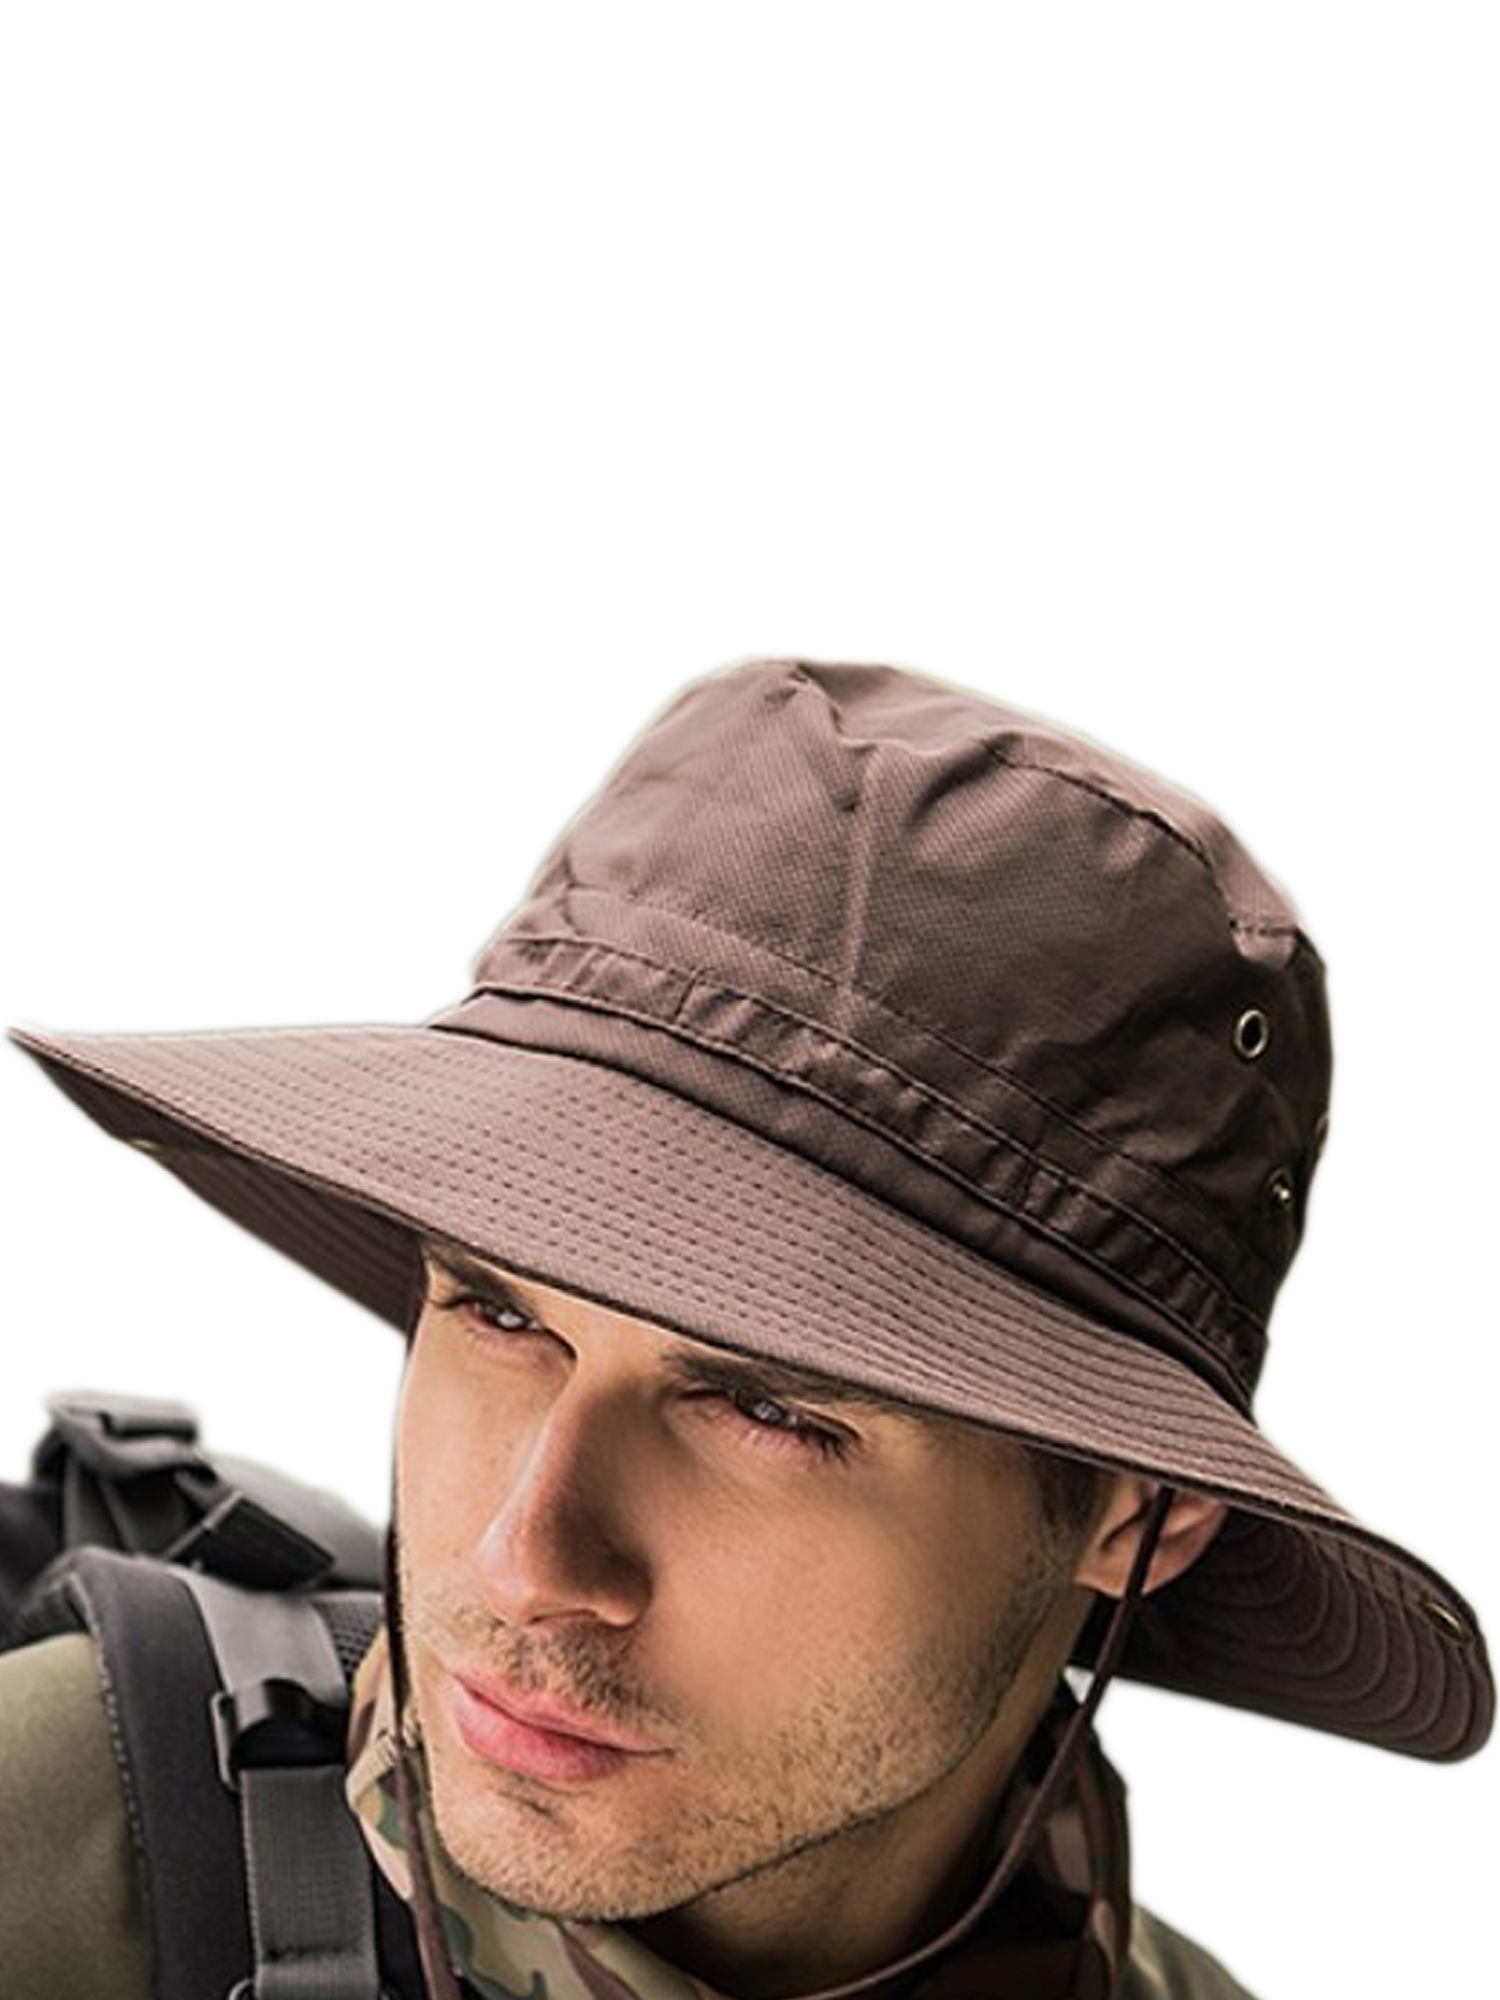 Dewadbow Hat Hunting Fishing Outdoor Cap Wide Brim Military Unisex Sun Camo - image 5 of 6